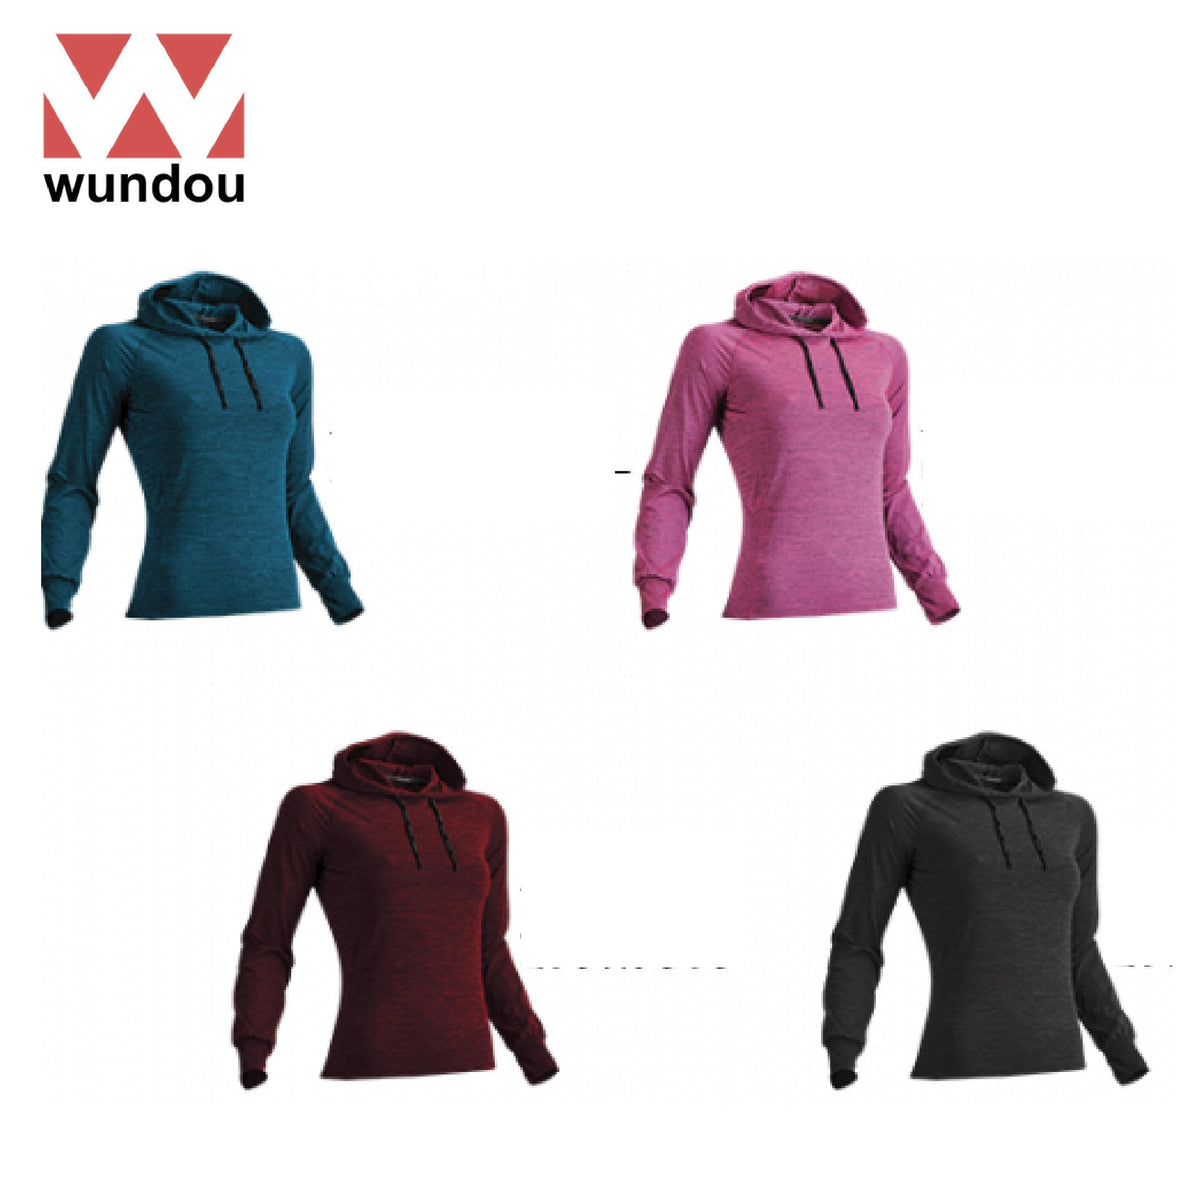 Wundou P760 Women's Long Sleeve Fitness Hoodie